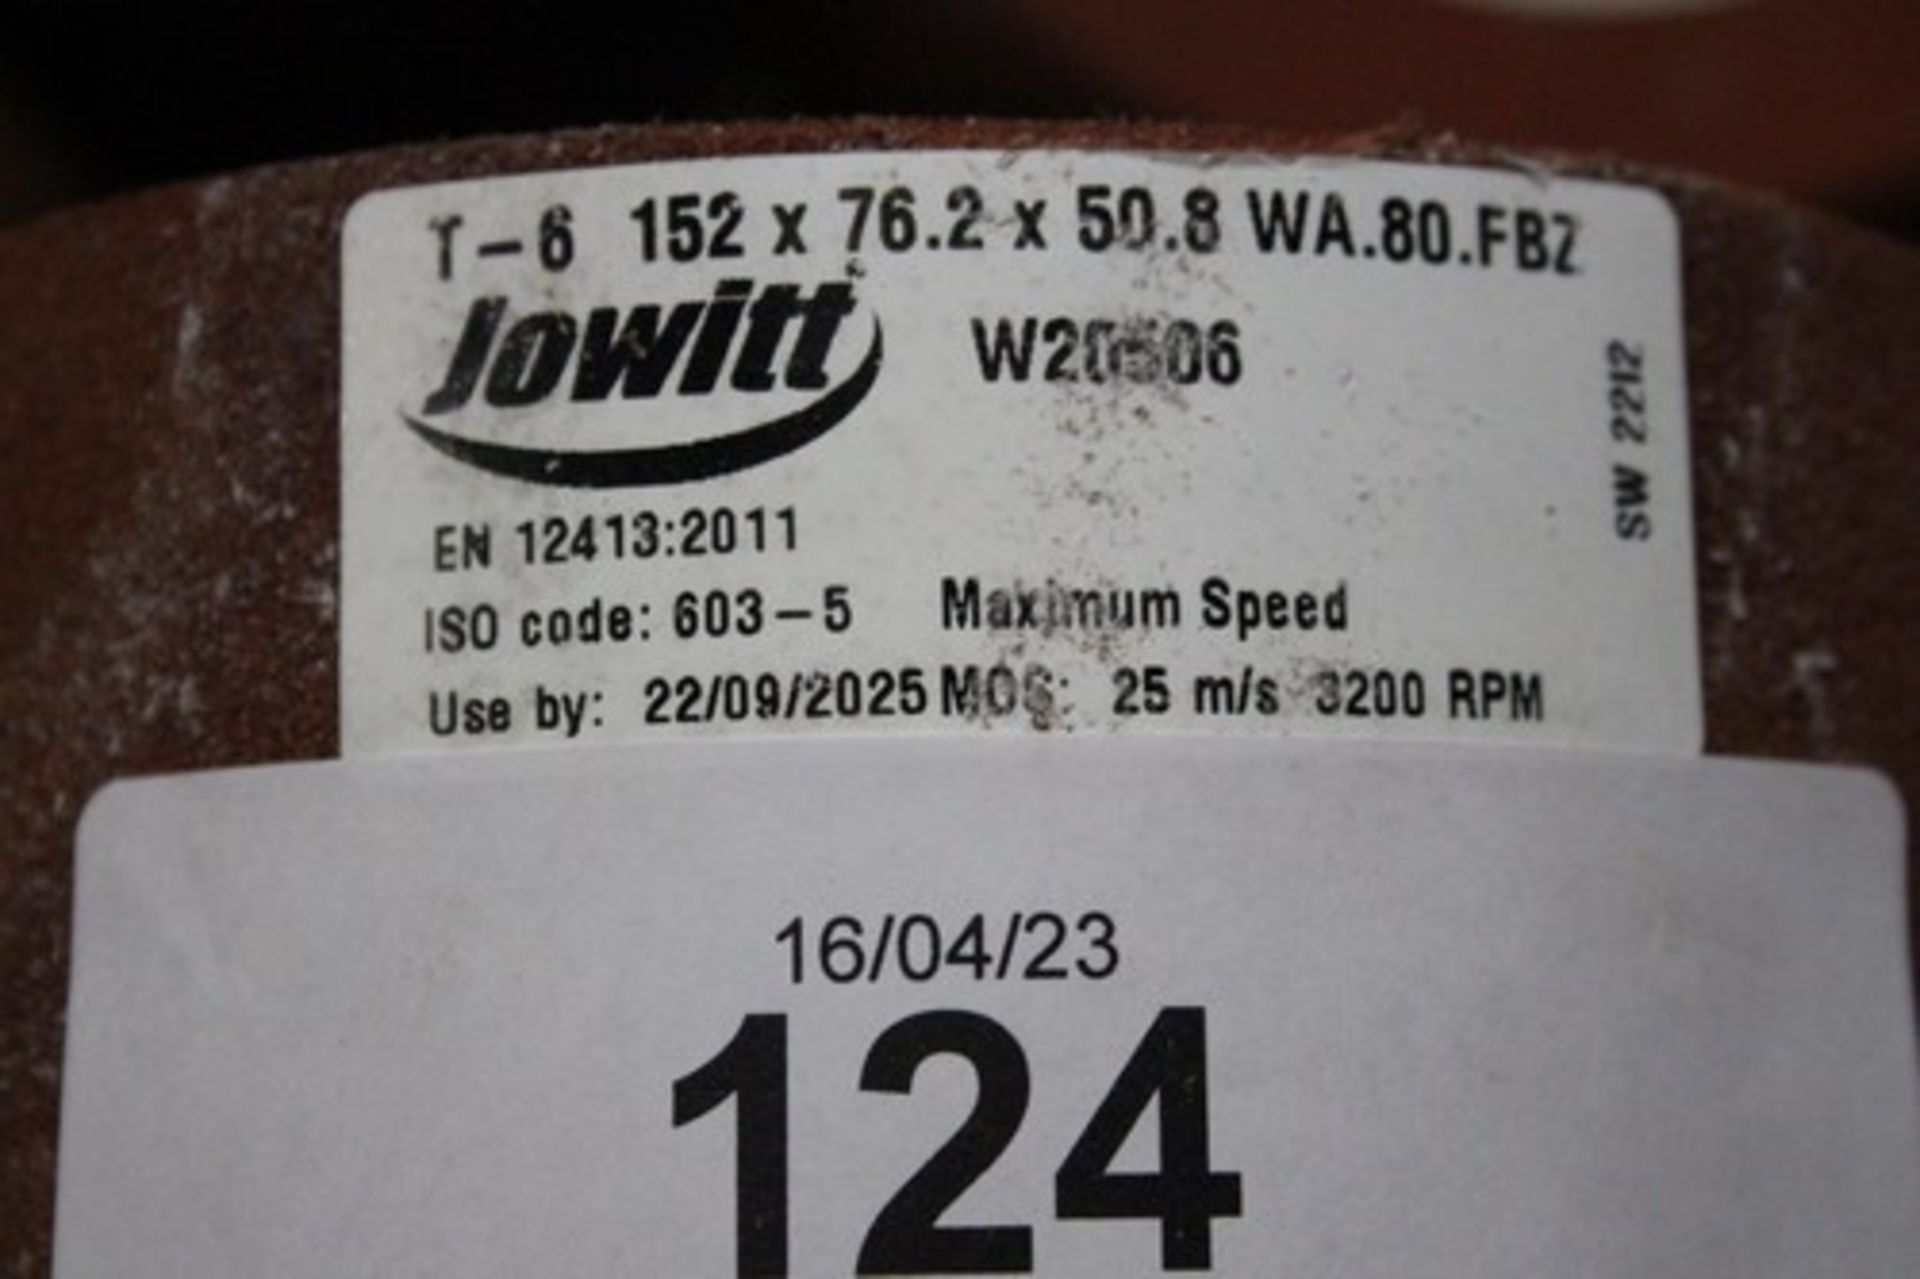 10 x Jowitt T-6 152 x 76.2 x 50.8 WA. 80 FBZ grinding wheels, code W20506 - New (SW4) - Image 2 of 2